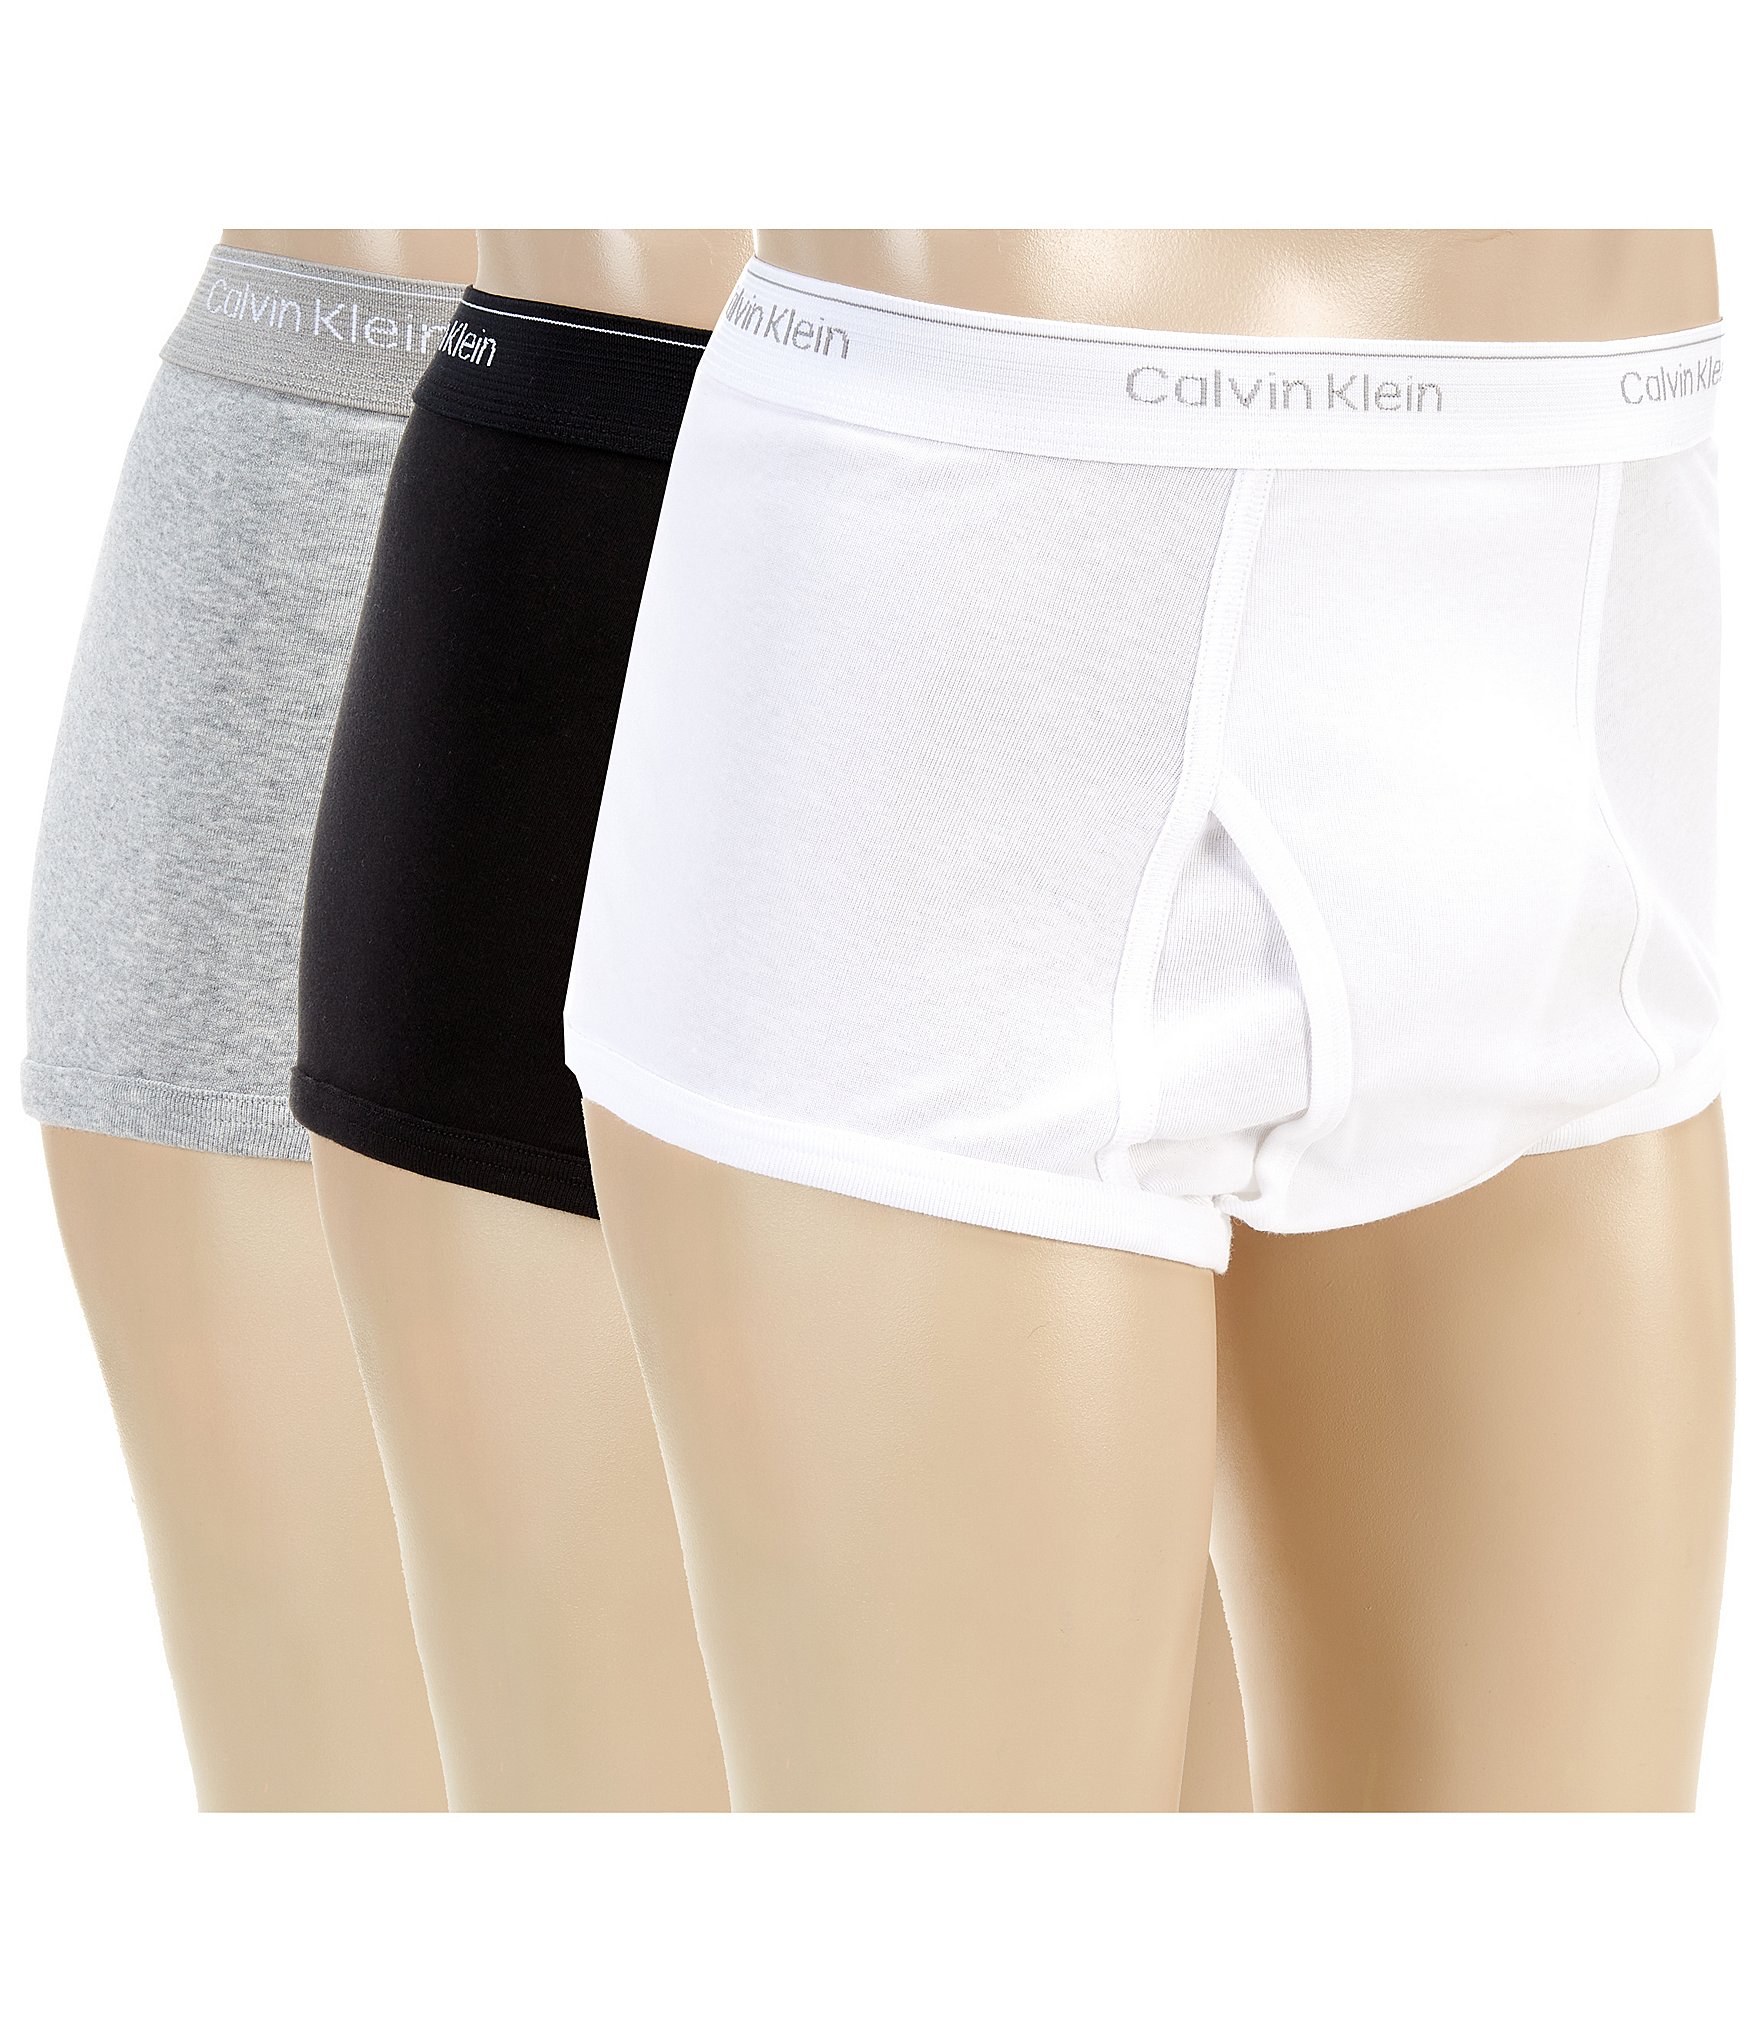 KingSize Men's Big & Tall Classic Cotton Briefs 3-Pack - Big - 7XL,  Assorted Basic Multicolored Underwear